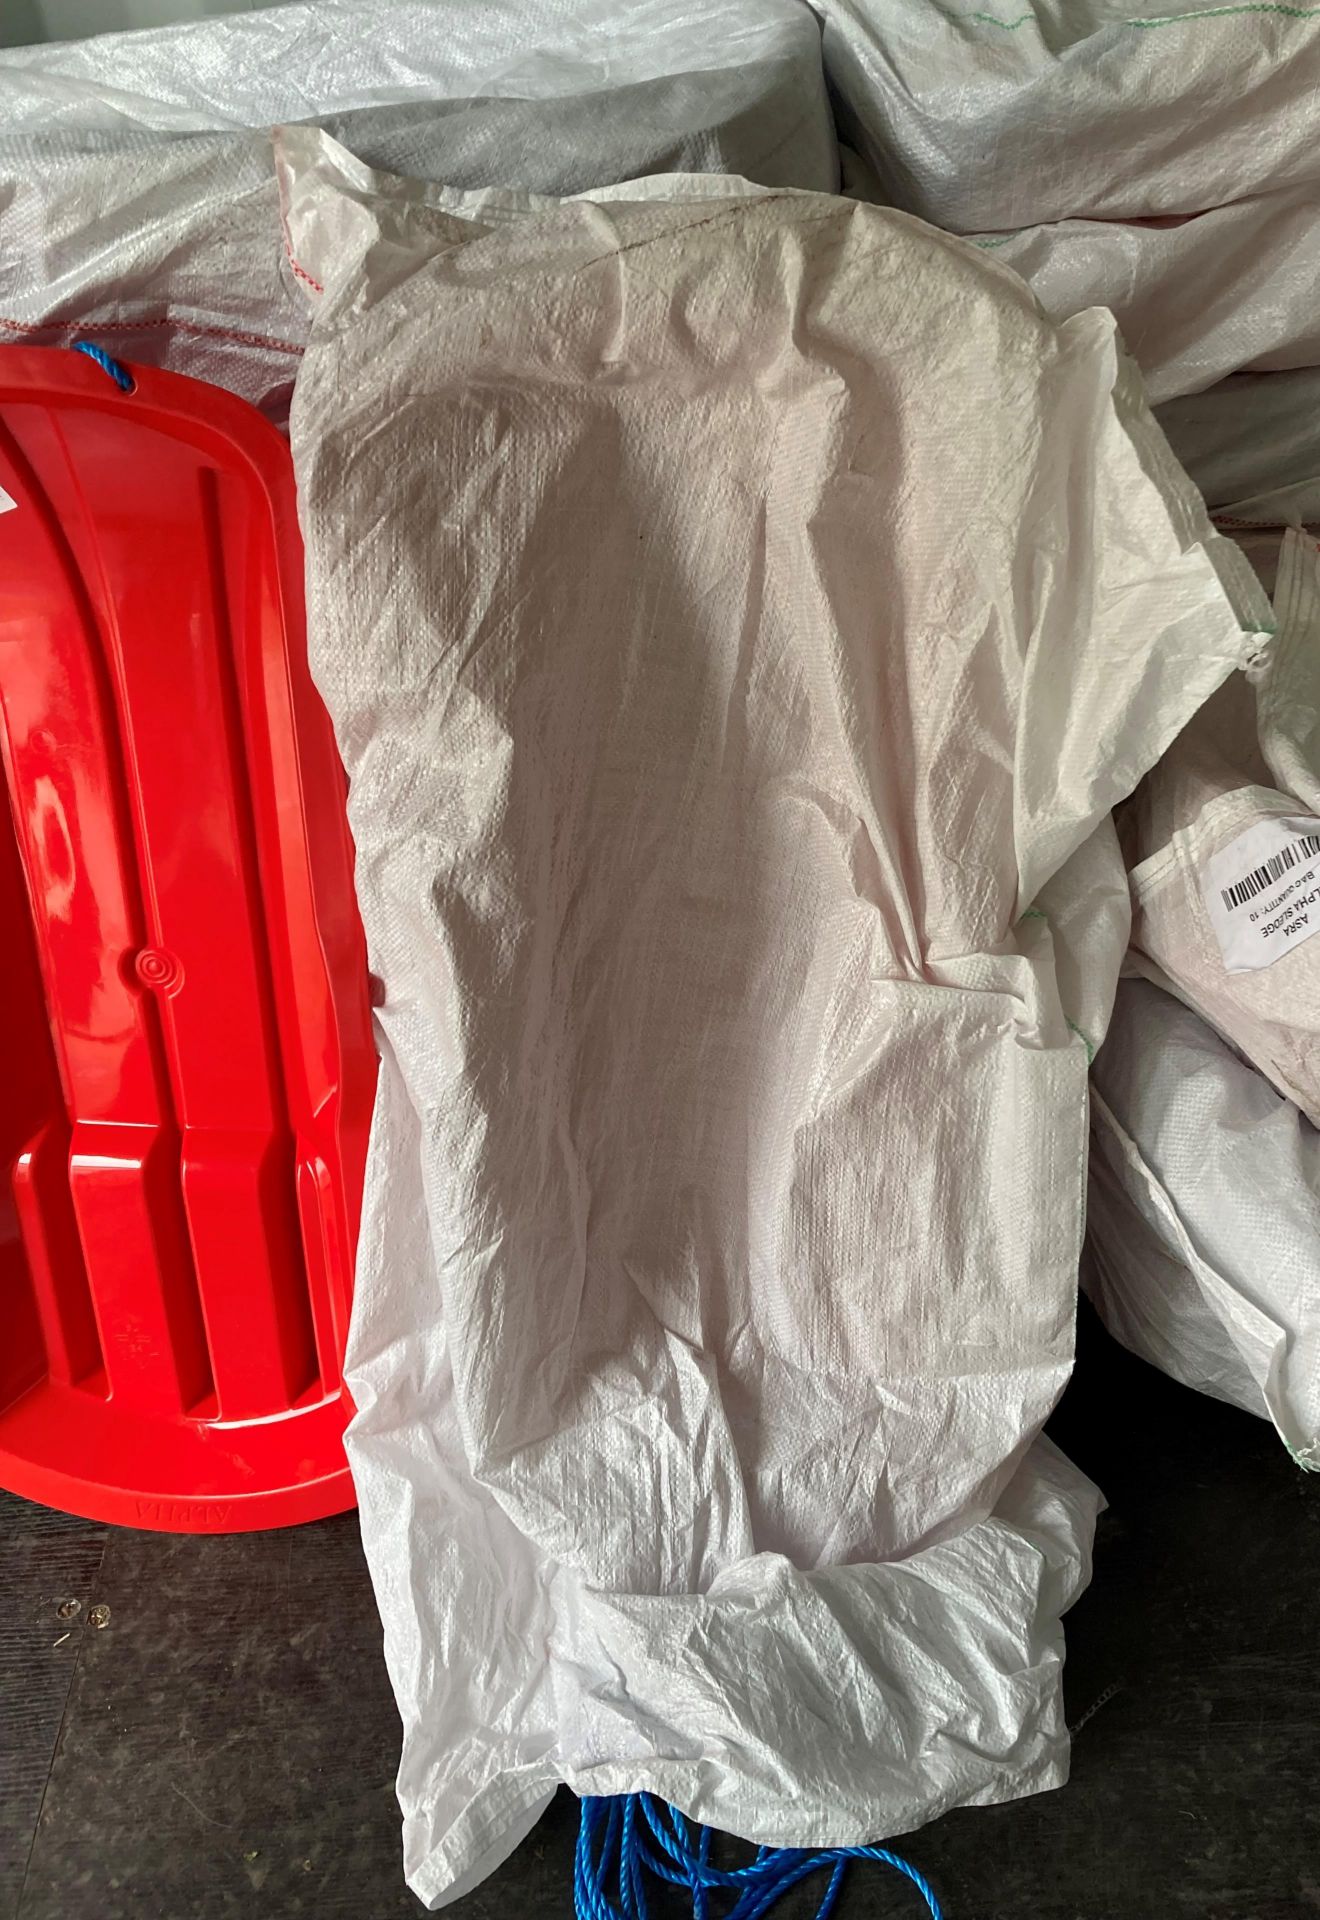 20 x Asra Alpha children's sledges - red (2 x sacks) (saleroom location: container 9) - Image 3 of 4